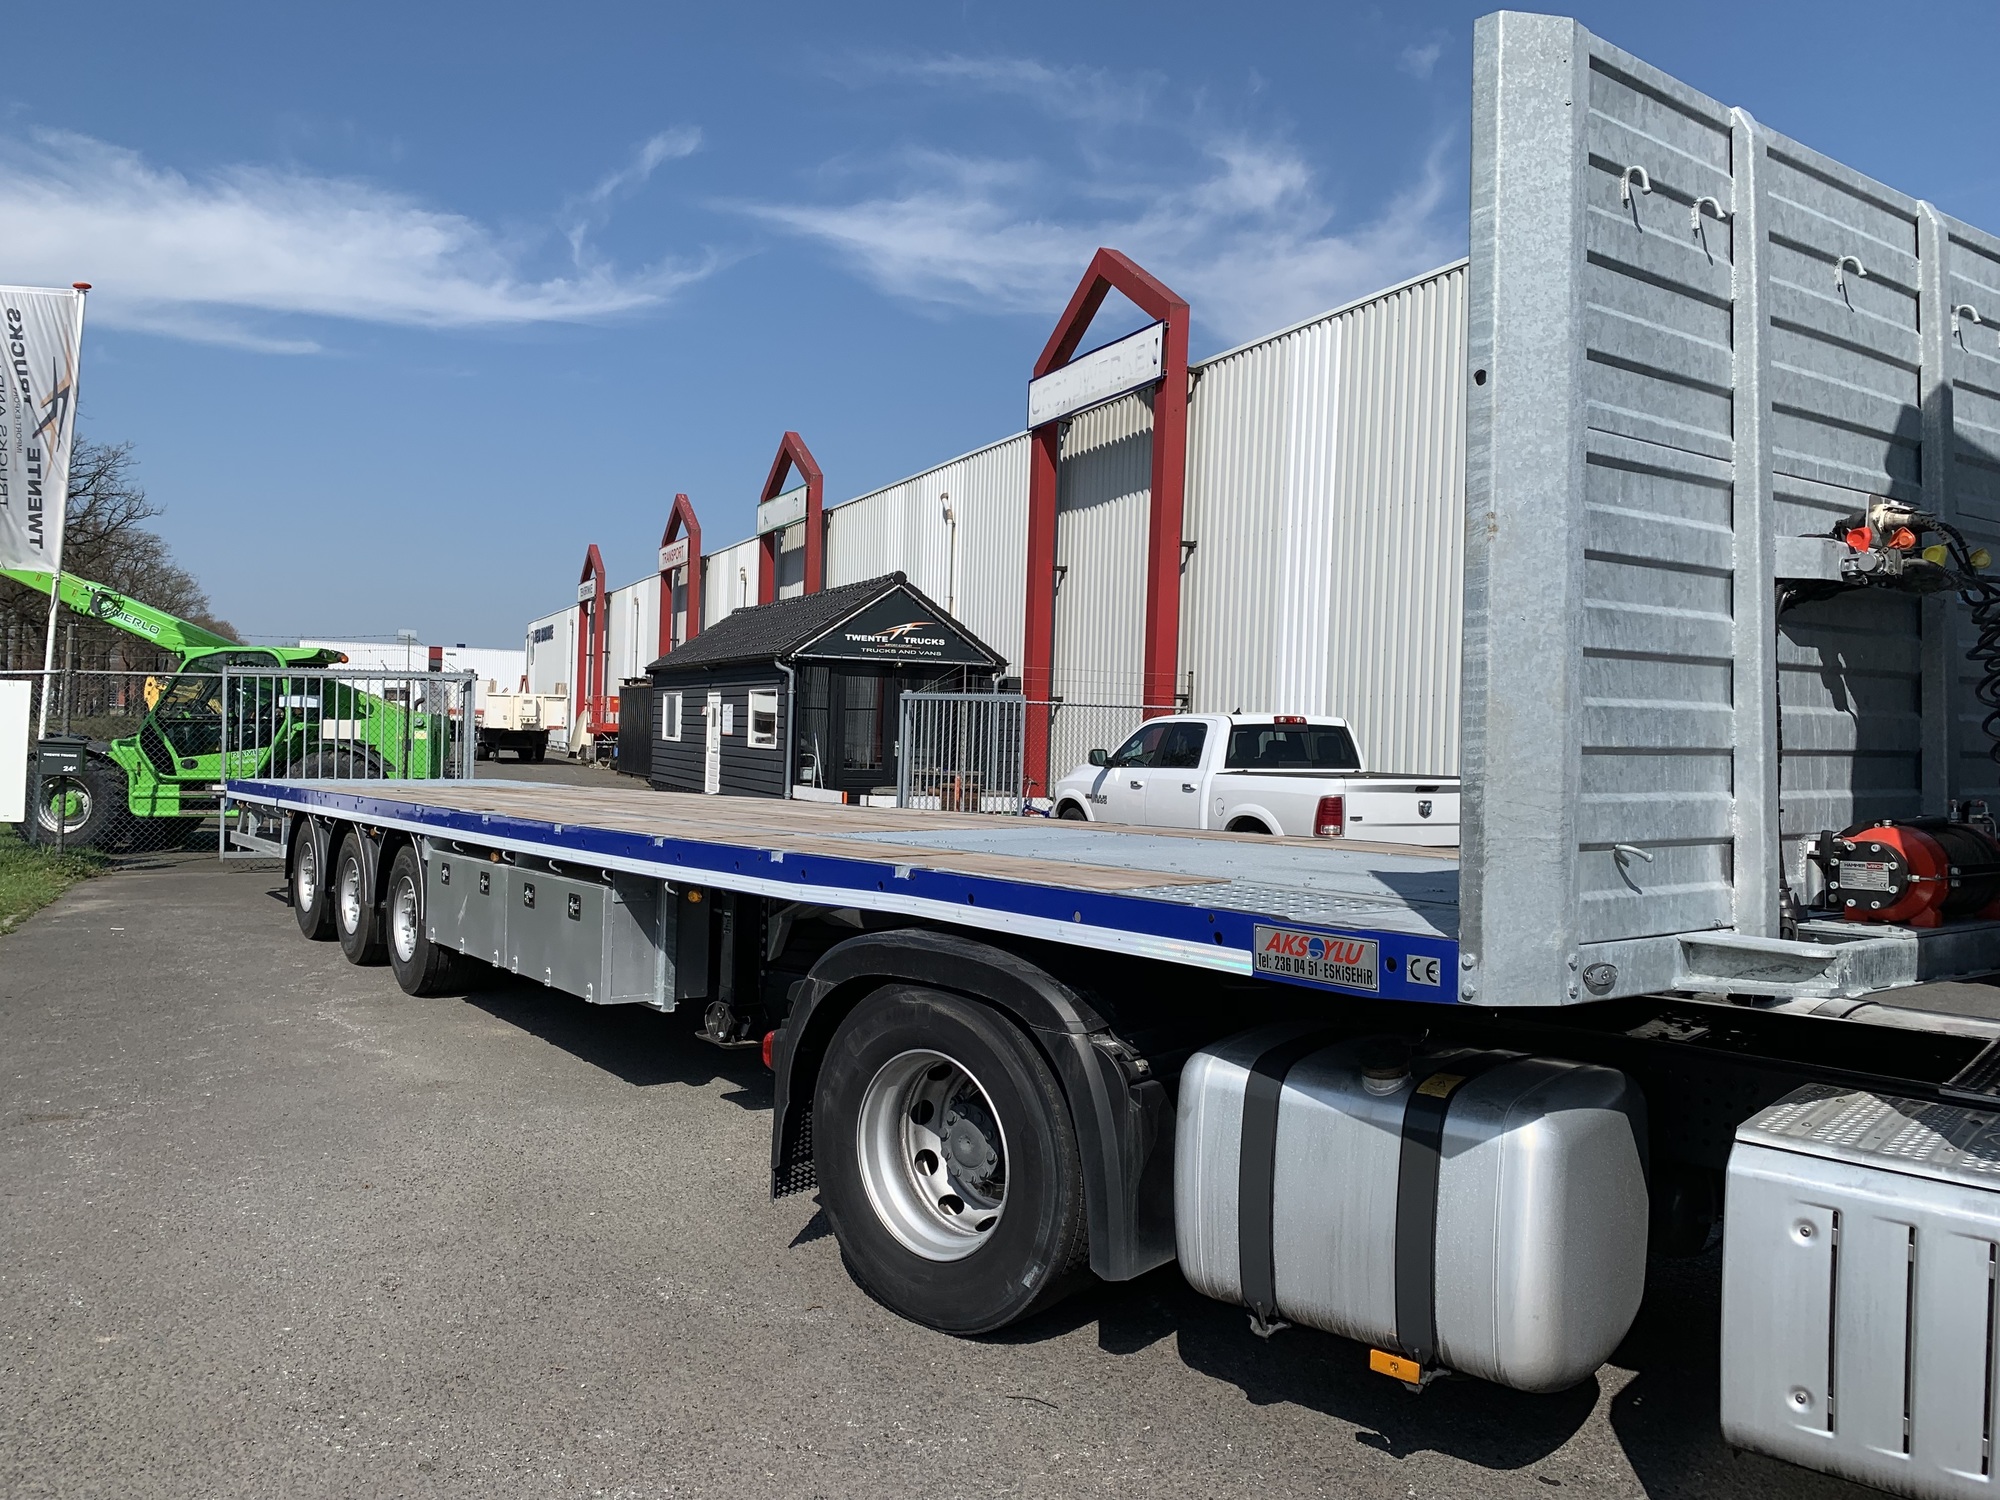 Twente Trucks undefined: slika Twente Trucks undefined